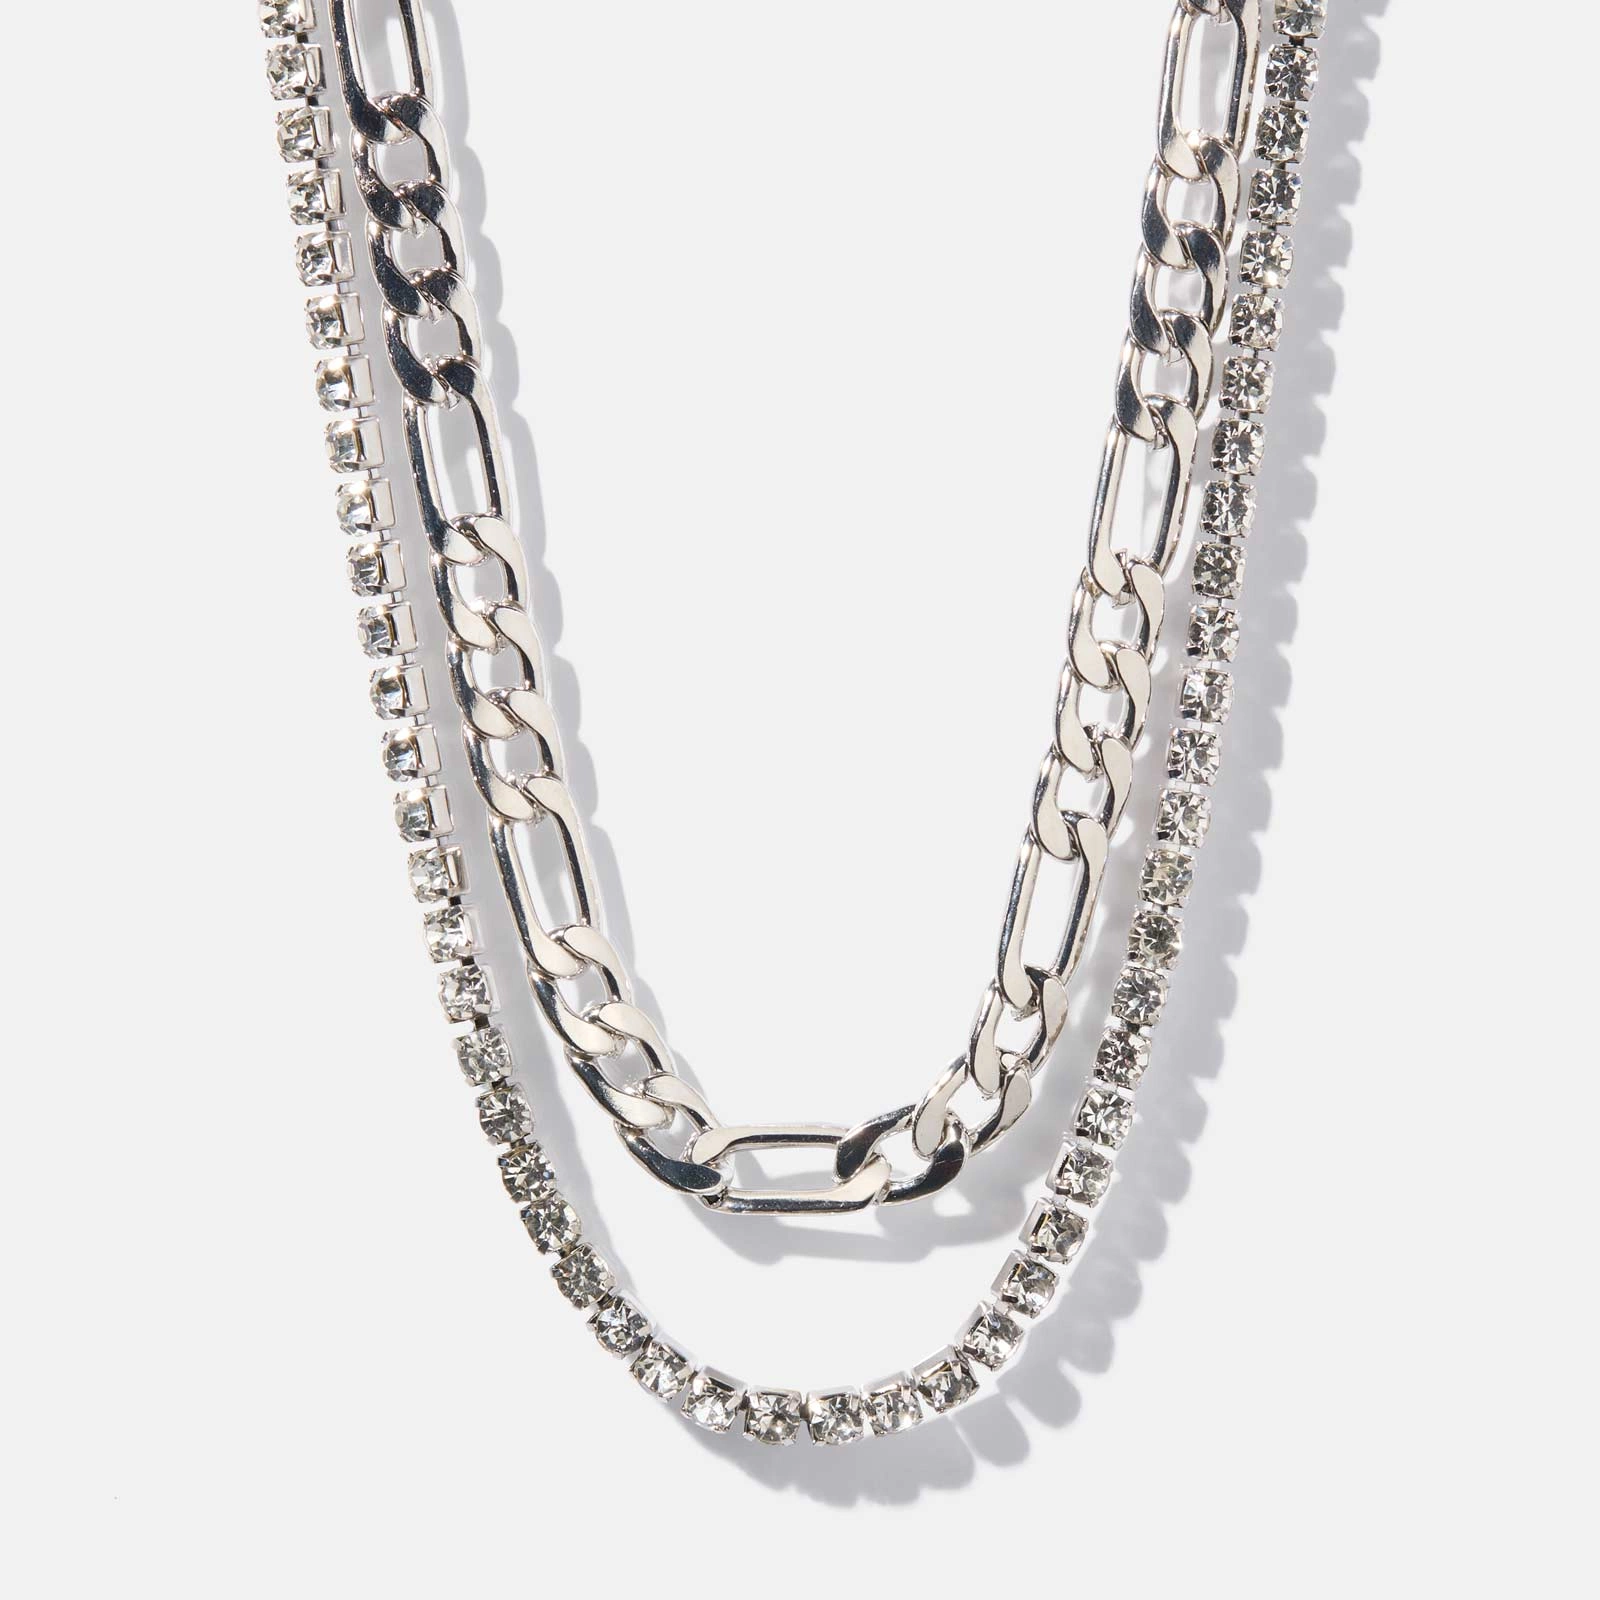 2-radigt silverfärgat halsband - kedjor, 40,44+6cm